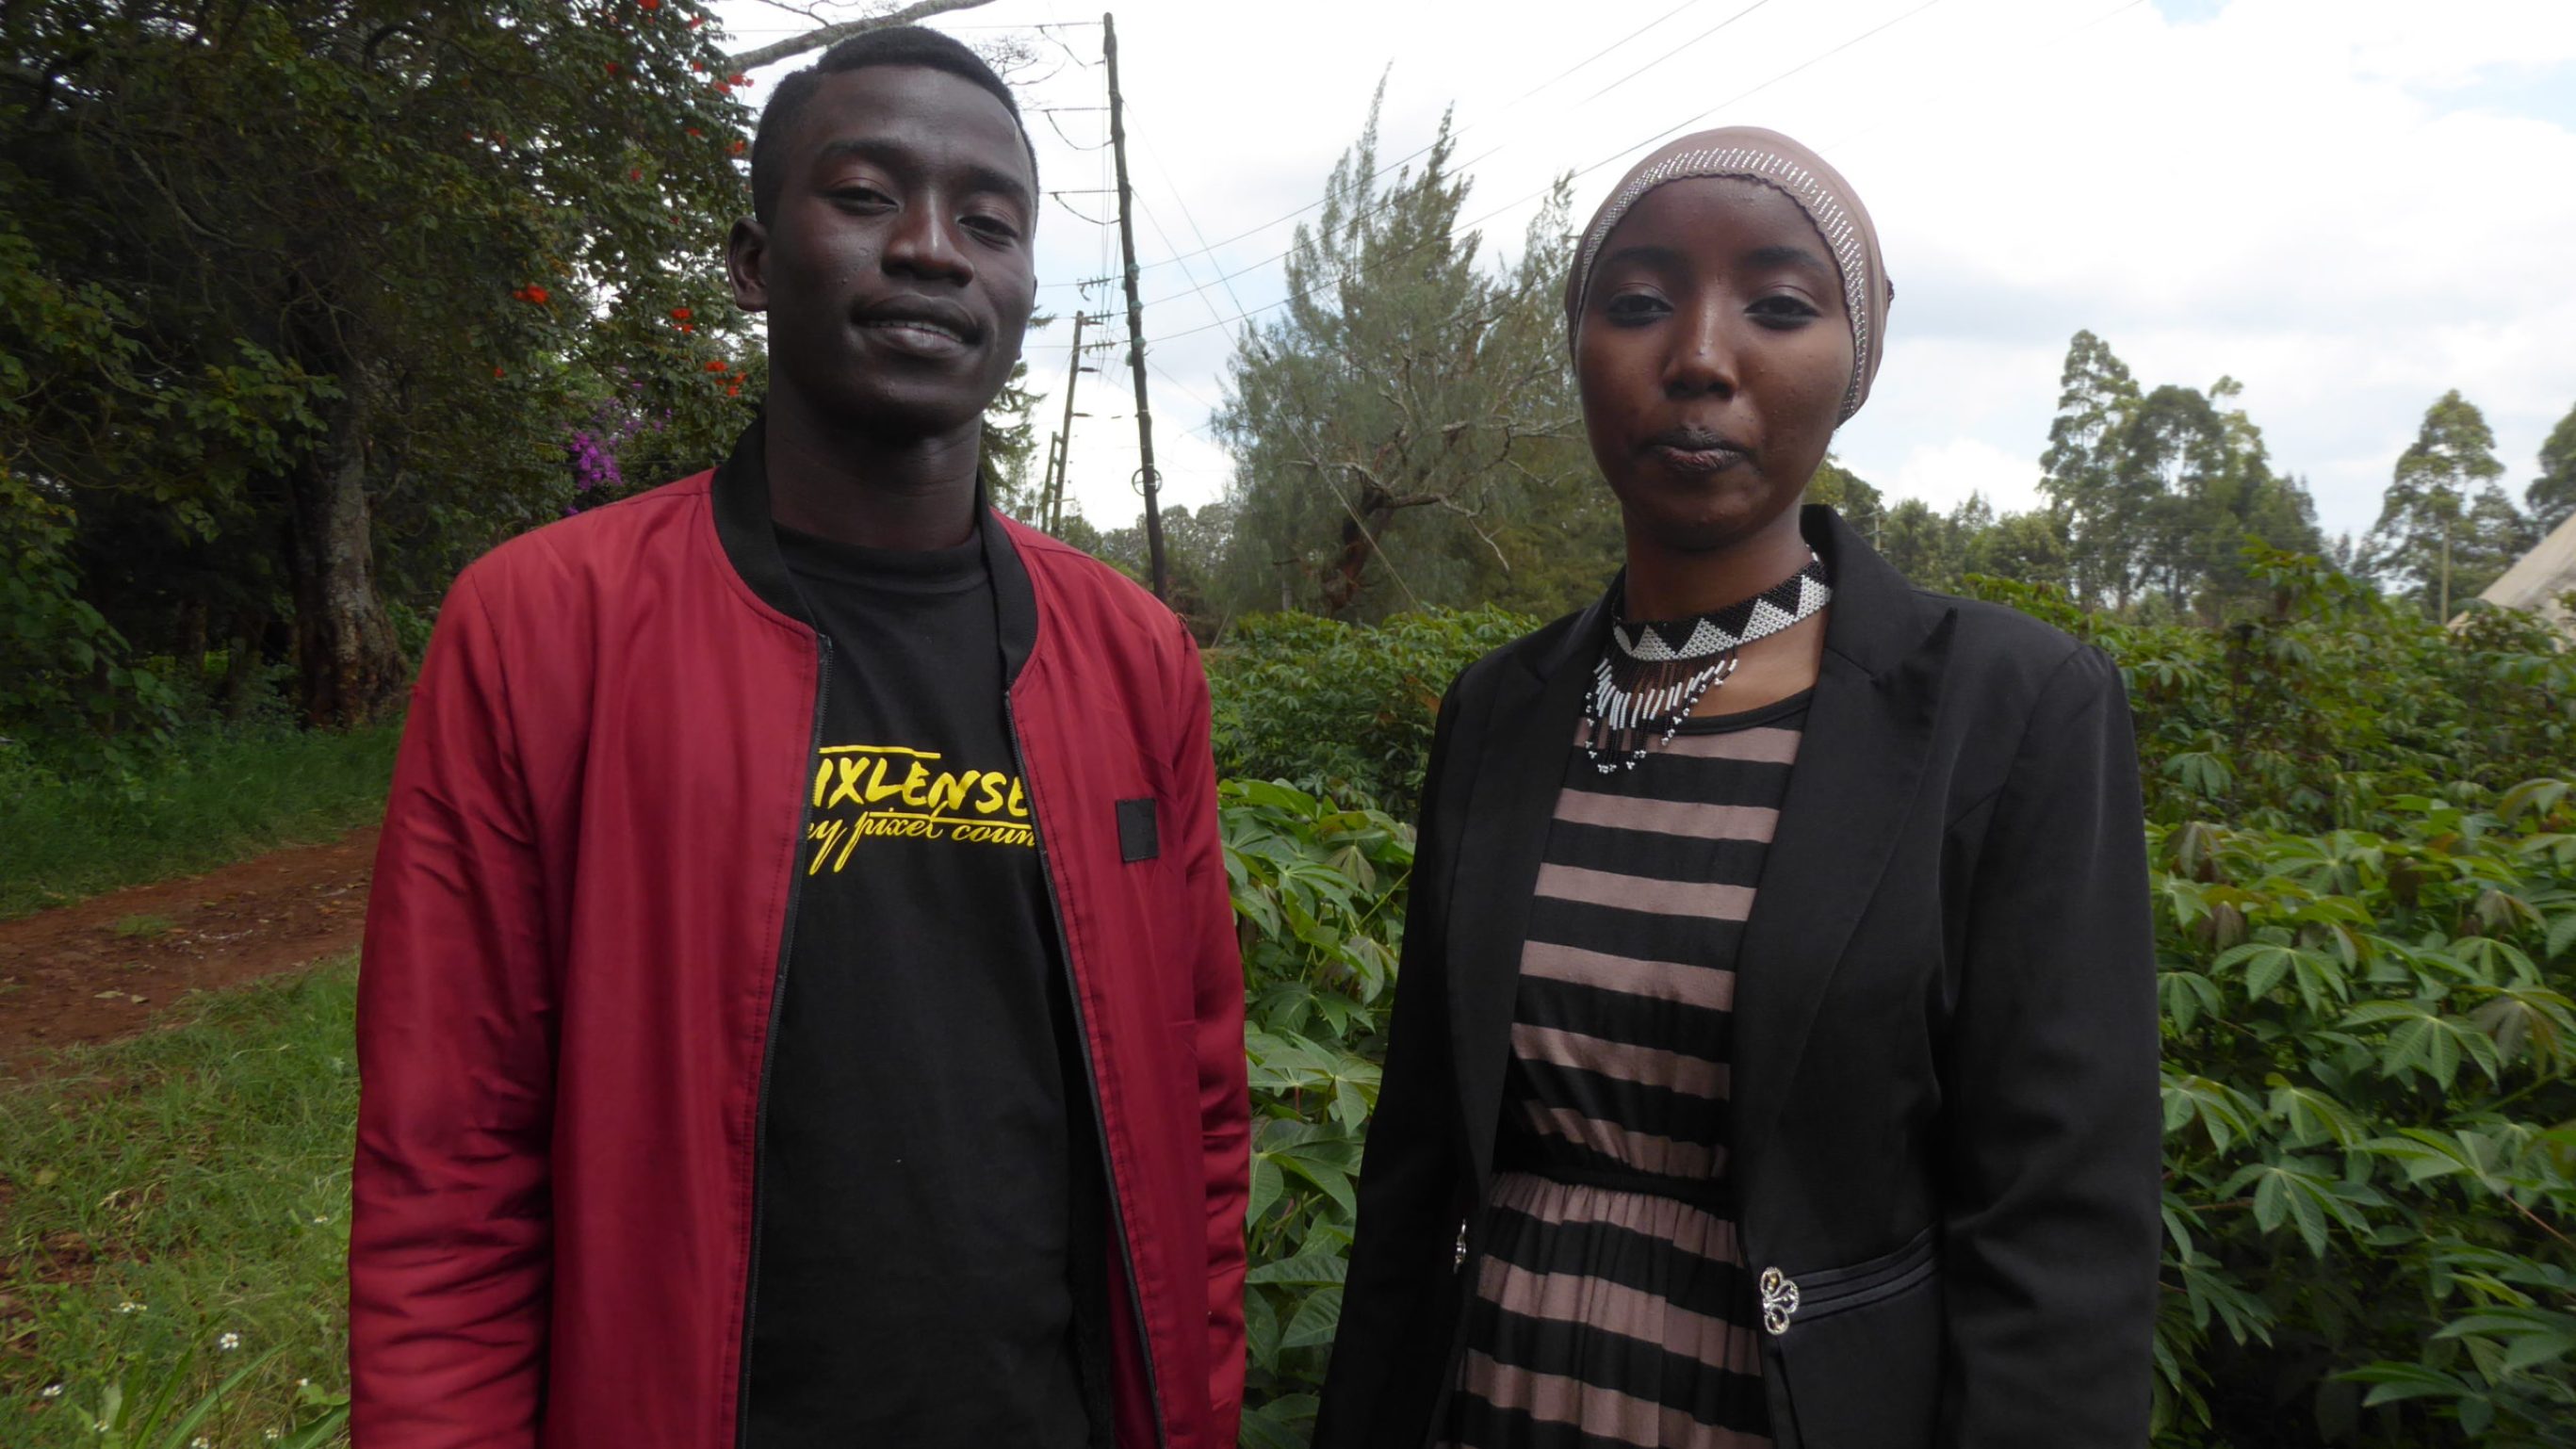 Diramu Guyo und Mit-AATC-Alumni Felix Odhiambo auf dem Universitäts-Campus in Nairobi.